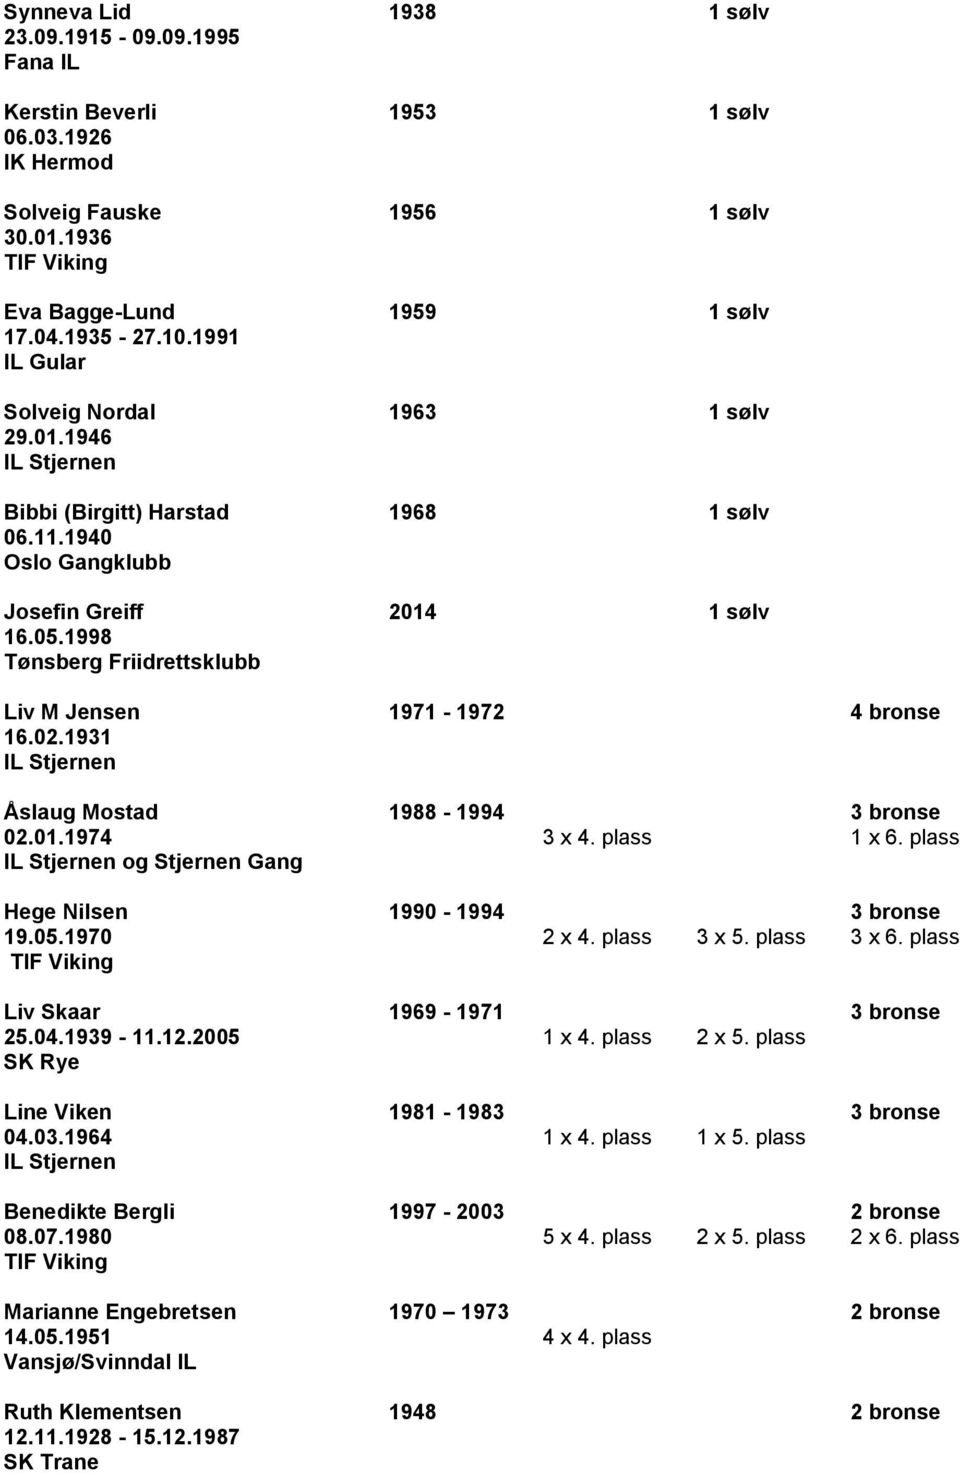 1998 Tønsberg Friidrettsklubb Liv M Jensen 1971-1972 4 bronse 16.02.1931 Åslaug Mostad 1988-1994 3 bronse 02.01.1974 3 x 4. plass 1 x 6. plass og Stjernen Gang Hege Nilsen 1990-1994 3 bronse 19.05.